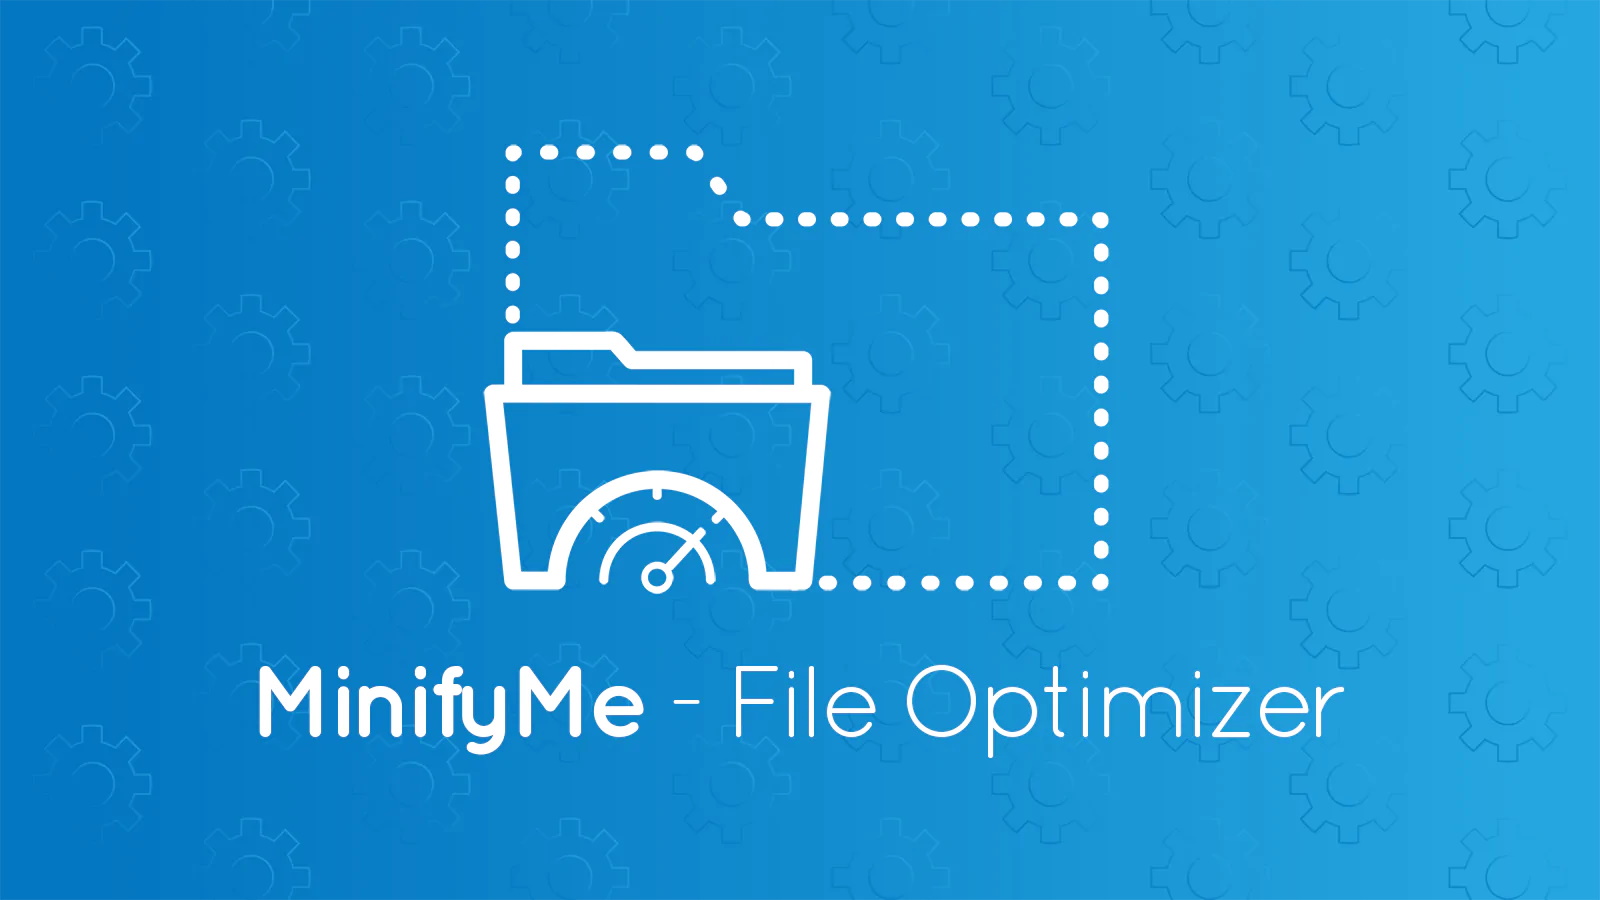 MinifyMe ‑ File Optimizer